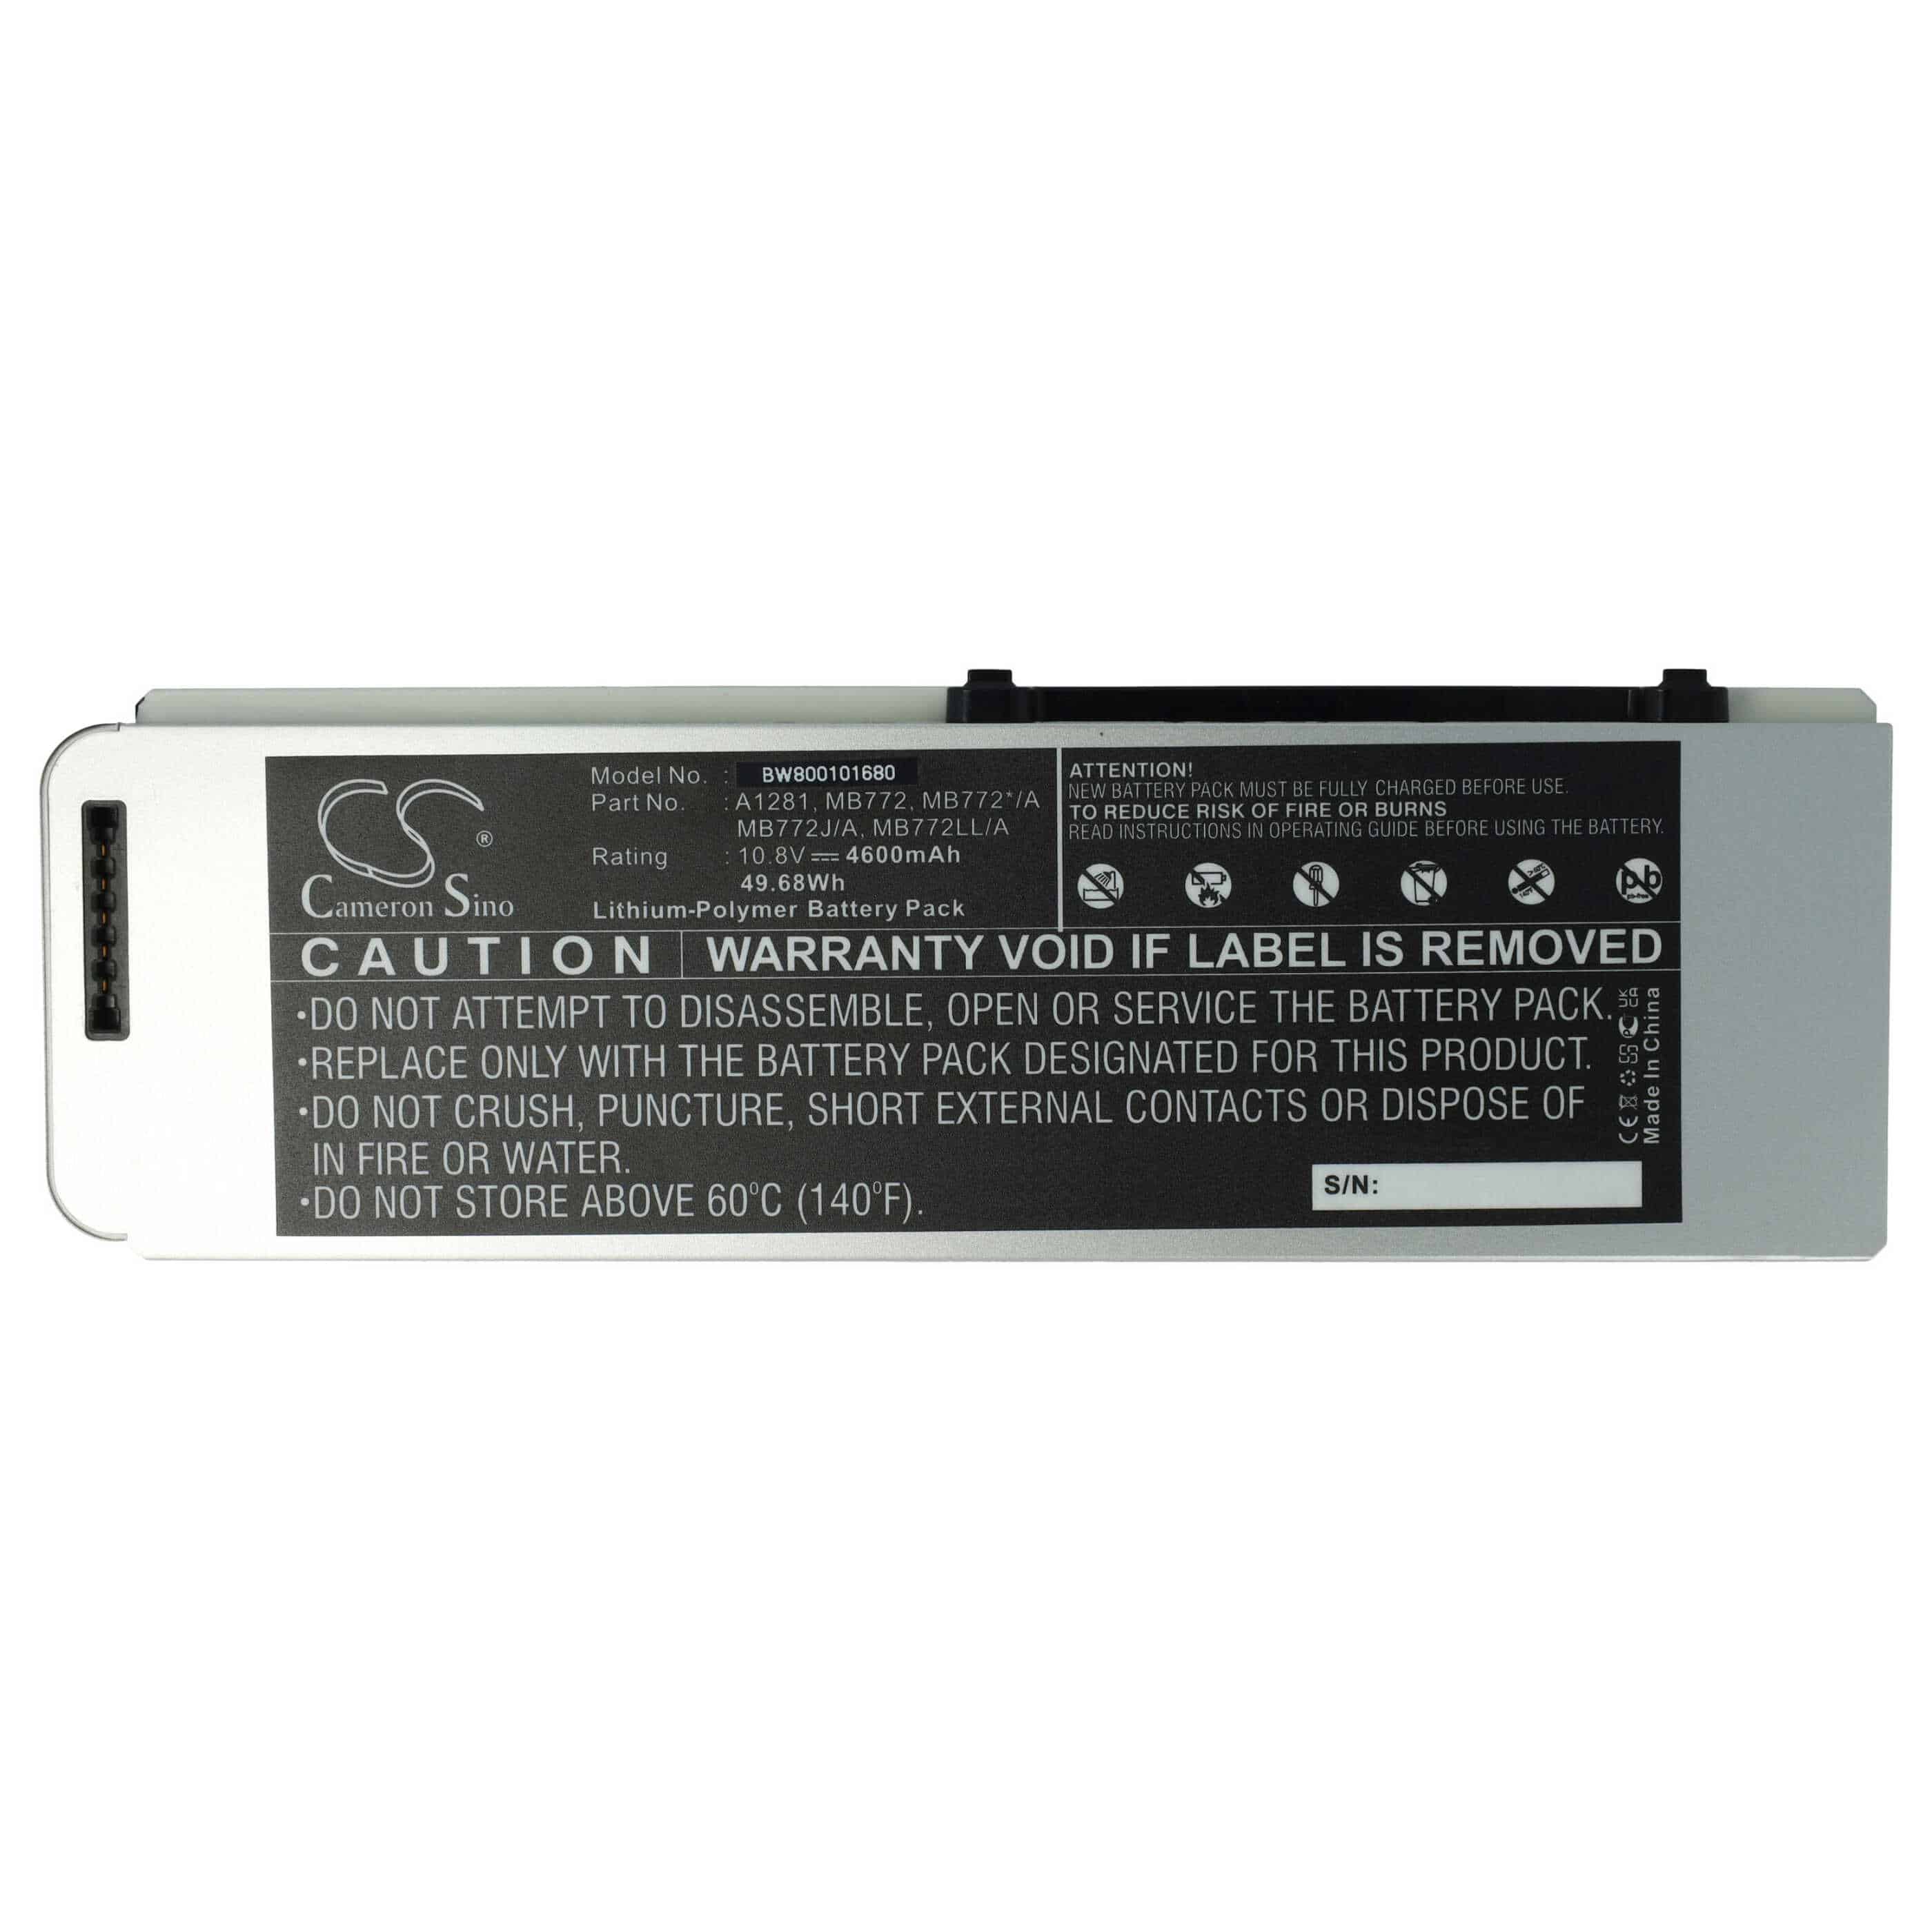 Akumulator do laptopa zamiennik Apple MB772*/A, MB772, A1286, A1281 - 4400 mAh 10,8 V Li-Ion, srebrny